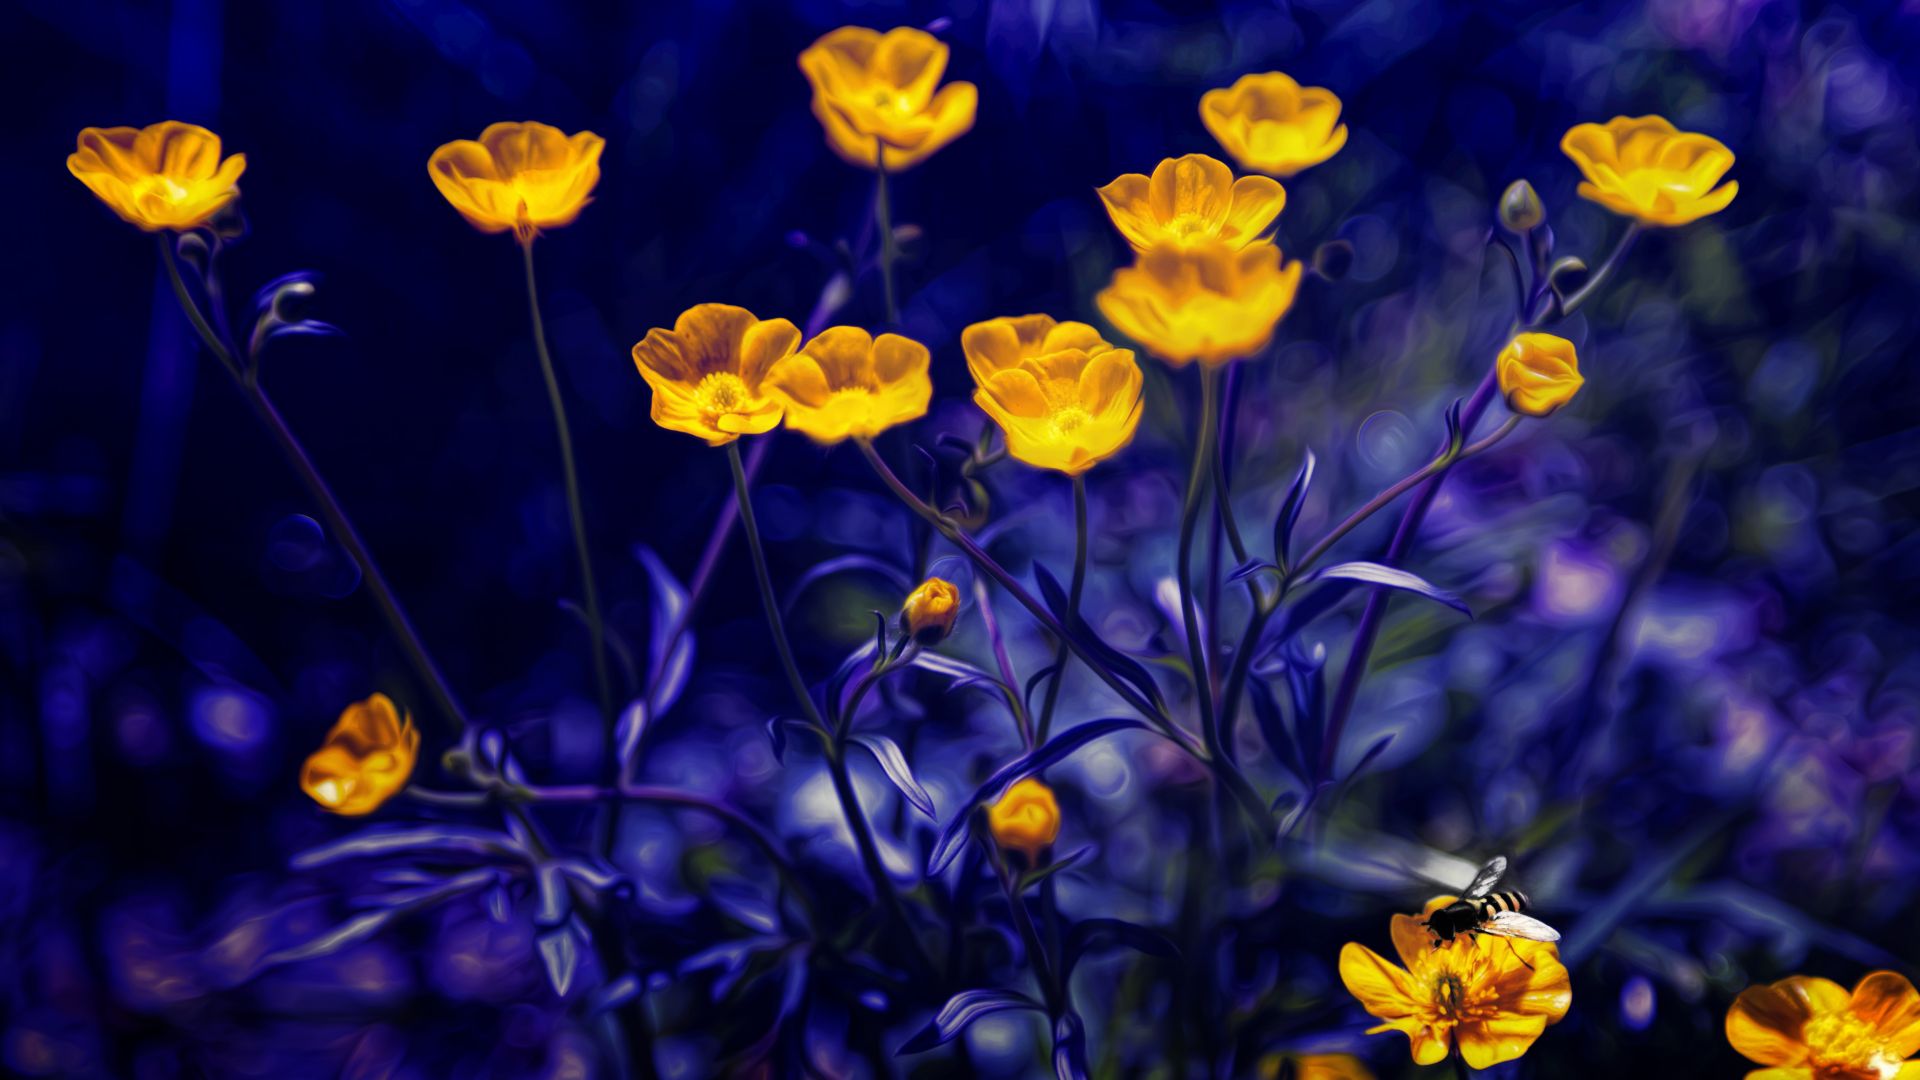 лютики, 4k, 5k, цветы, желтый, фиолетовый, Buttercups, 4k, 5k wallpaper, flowers, yellow, purple (horizontal)